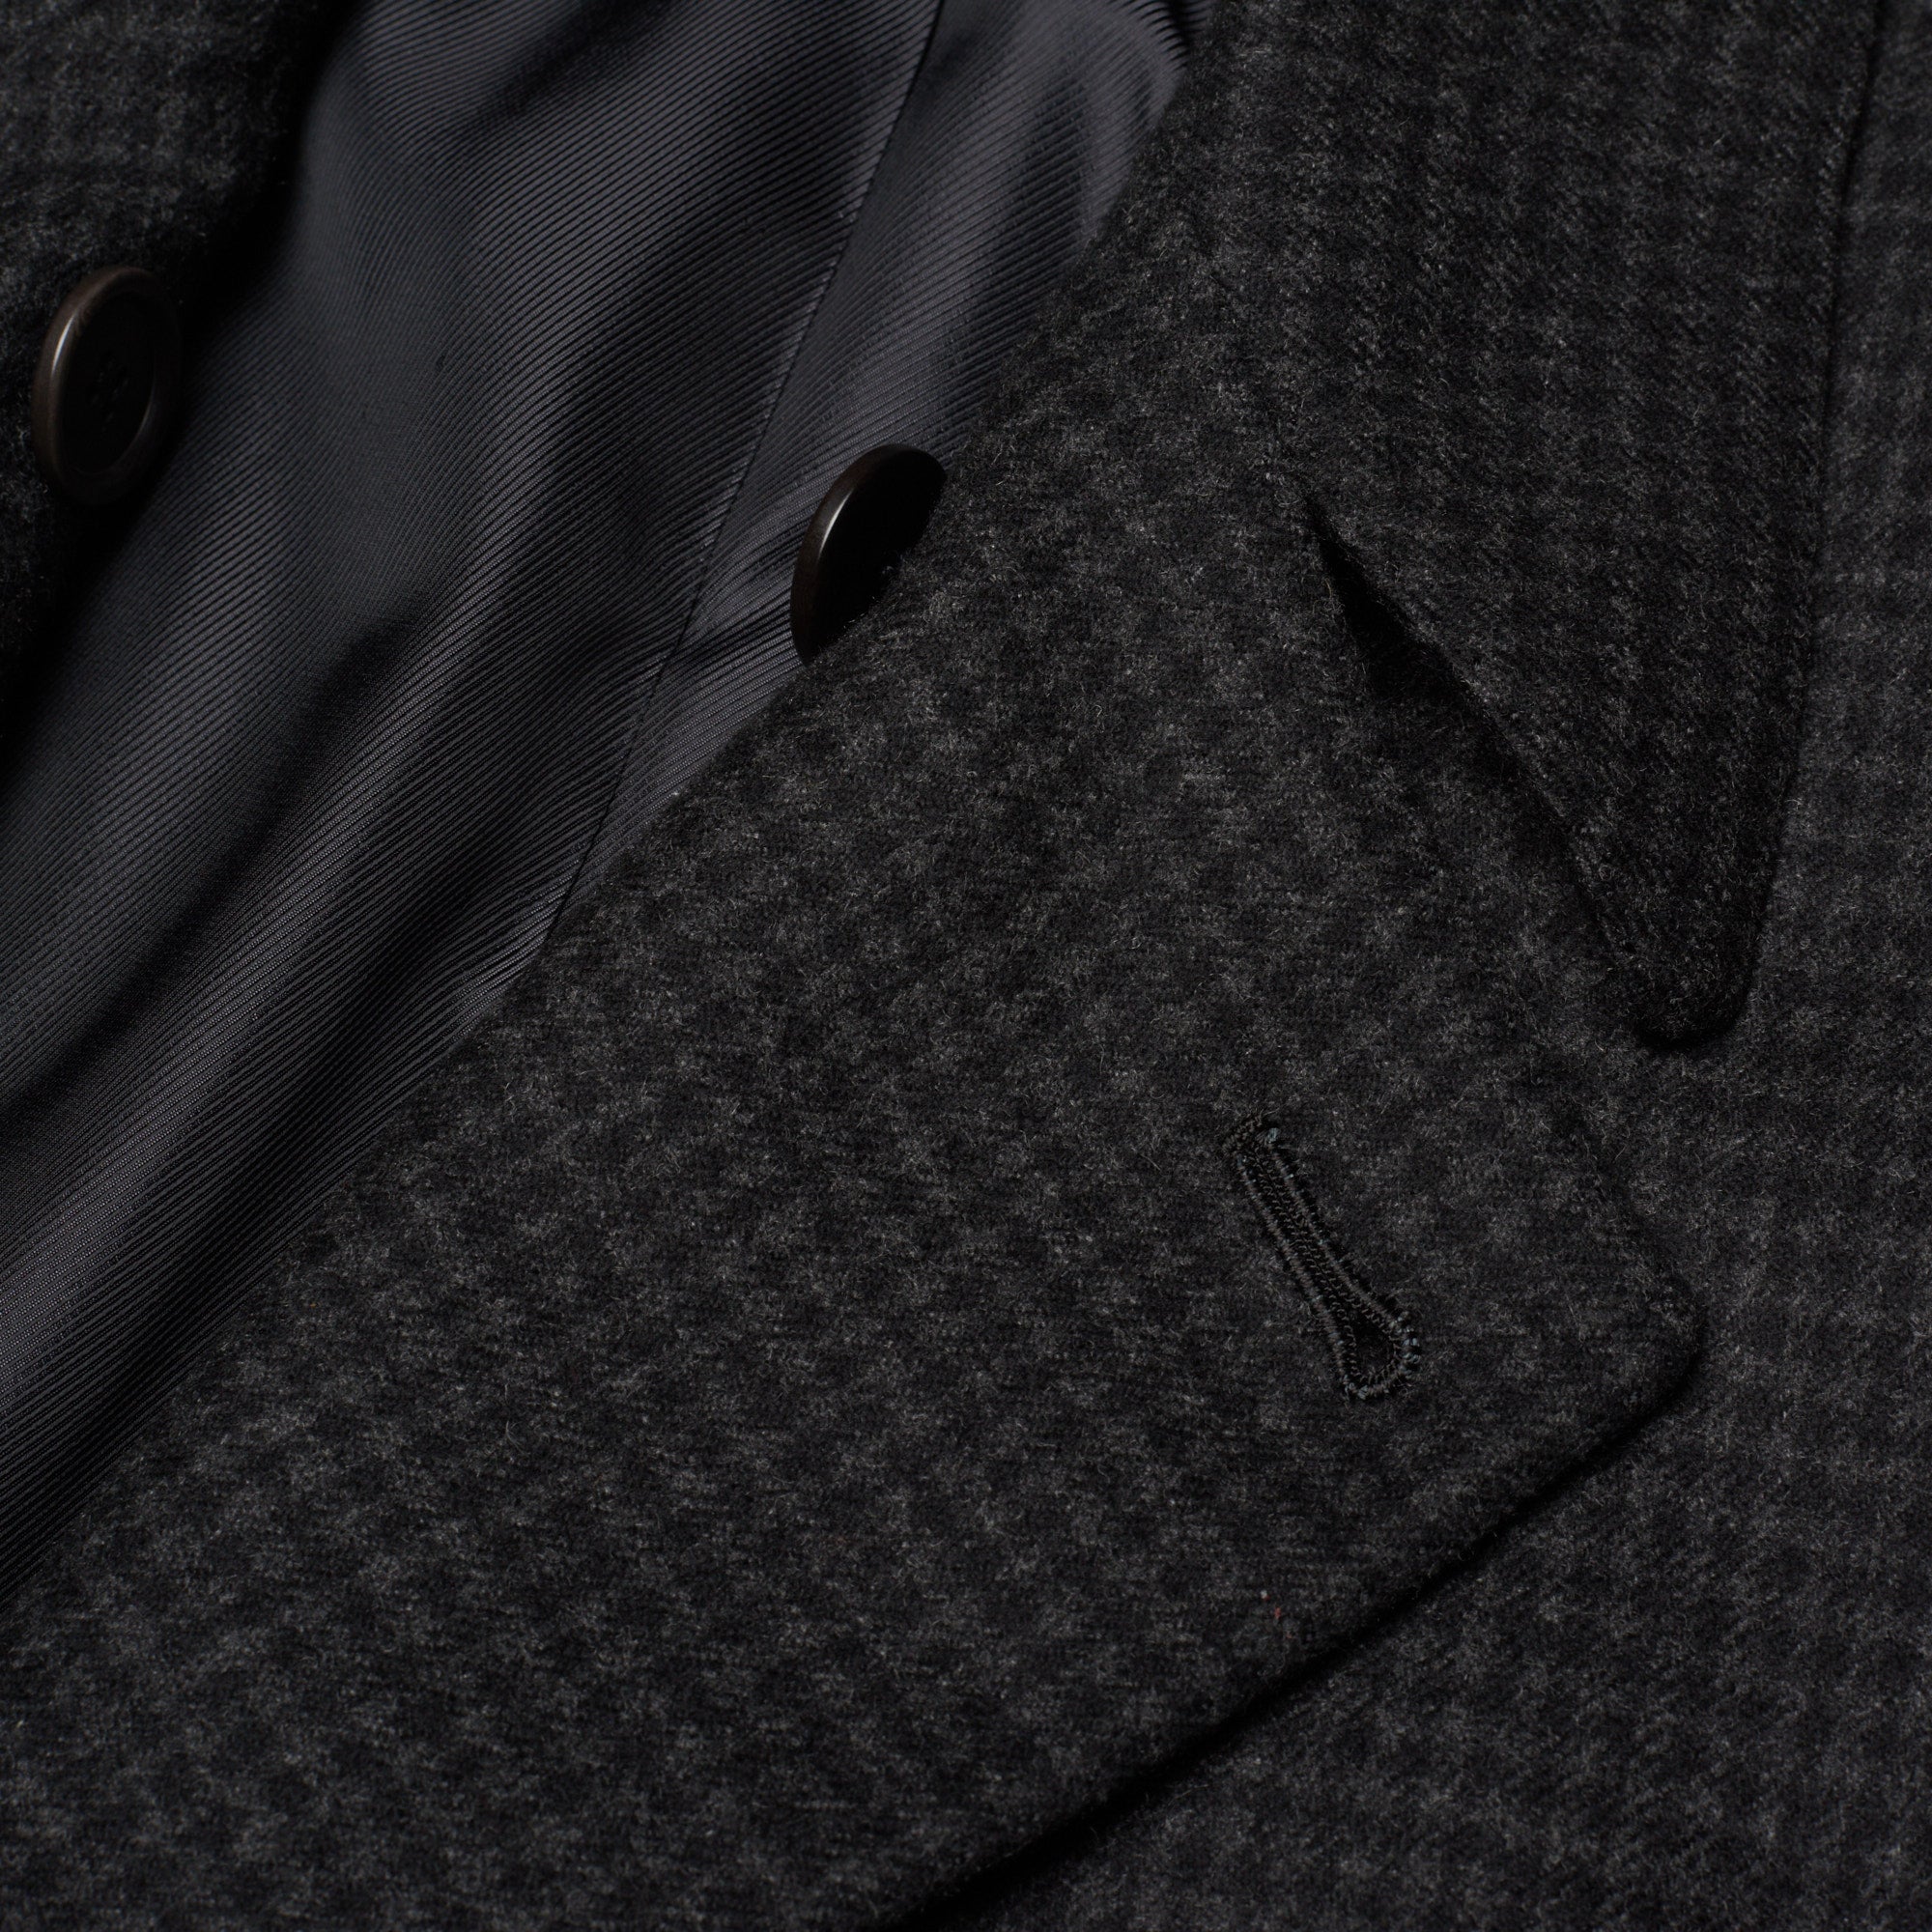 KITON Napoli Gray Checkered Cashmere-Silk DB Coat Overcoat EU 50 NEW US 40